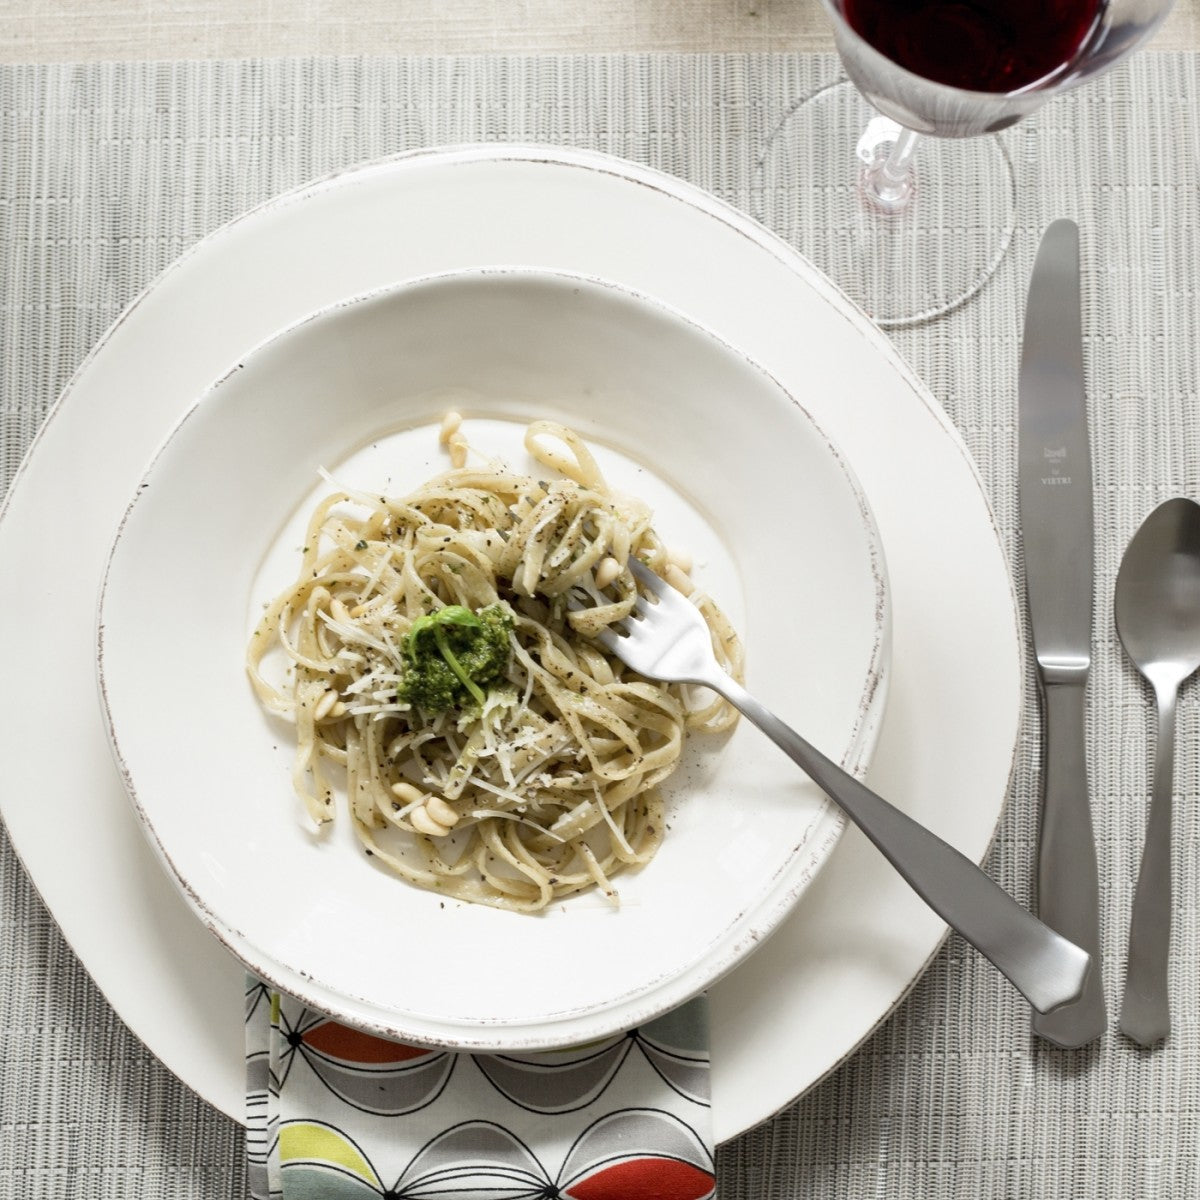 VIETRI: Lastra Linen European Dinner Plate - Artistica.com